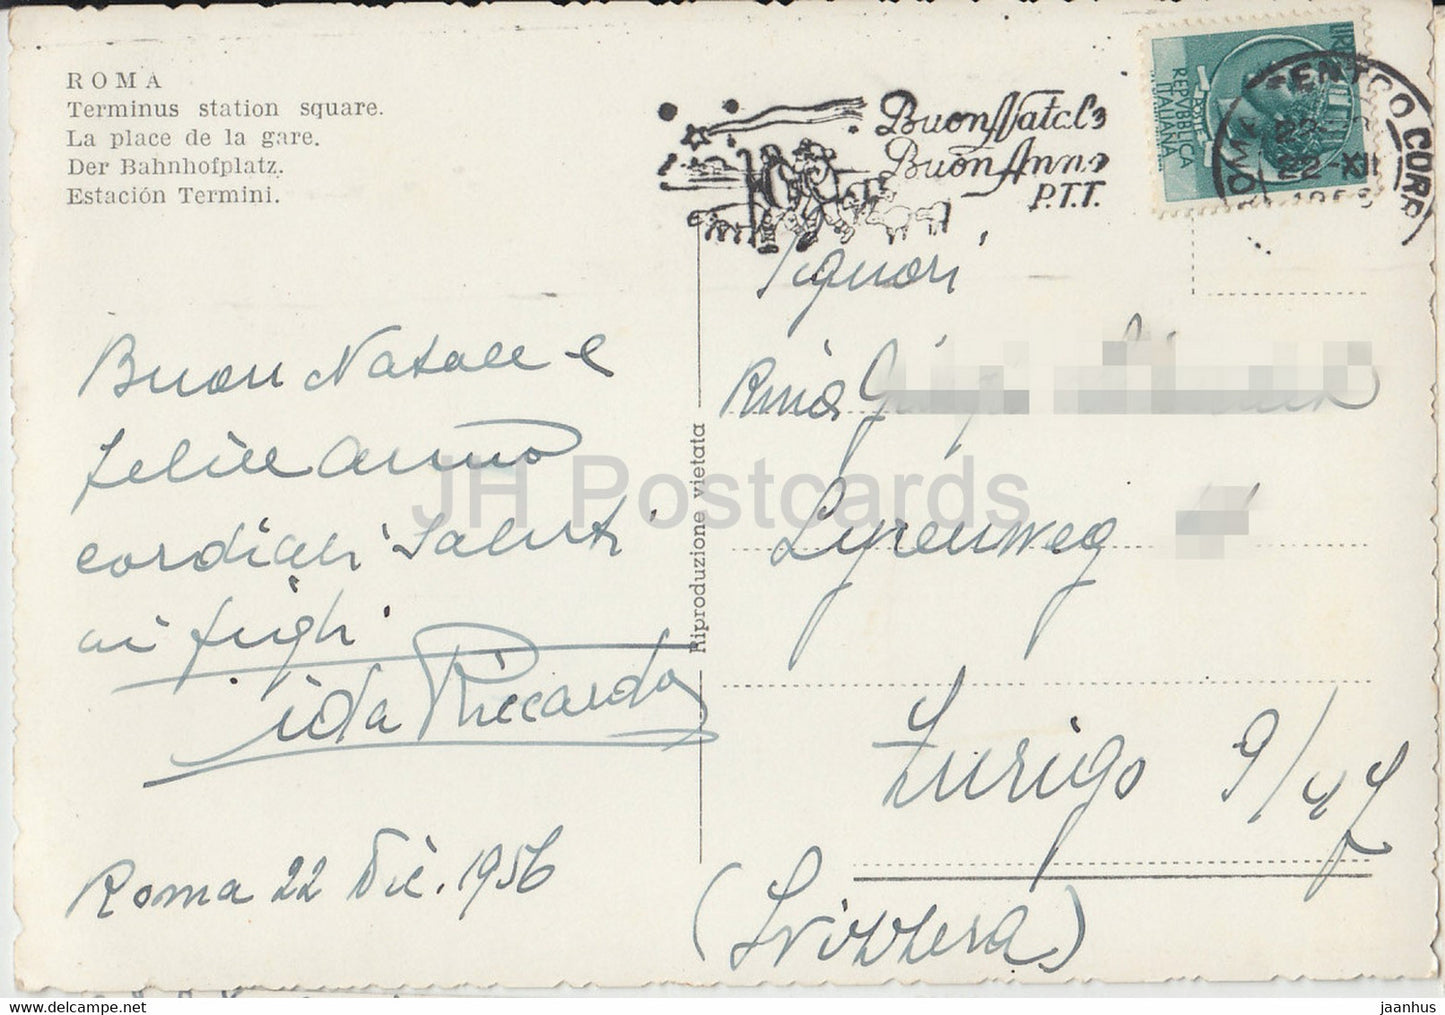 Roma - Rome - Stazioni Termini - Terminus station square - old postcard - 1956 - Italy - used